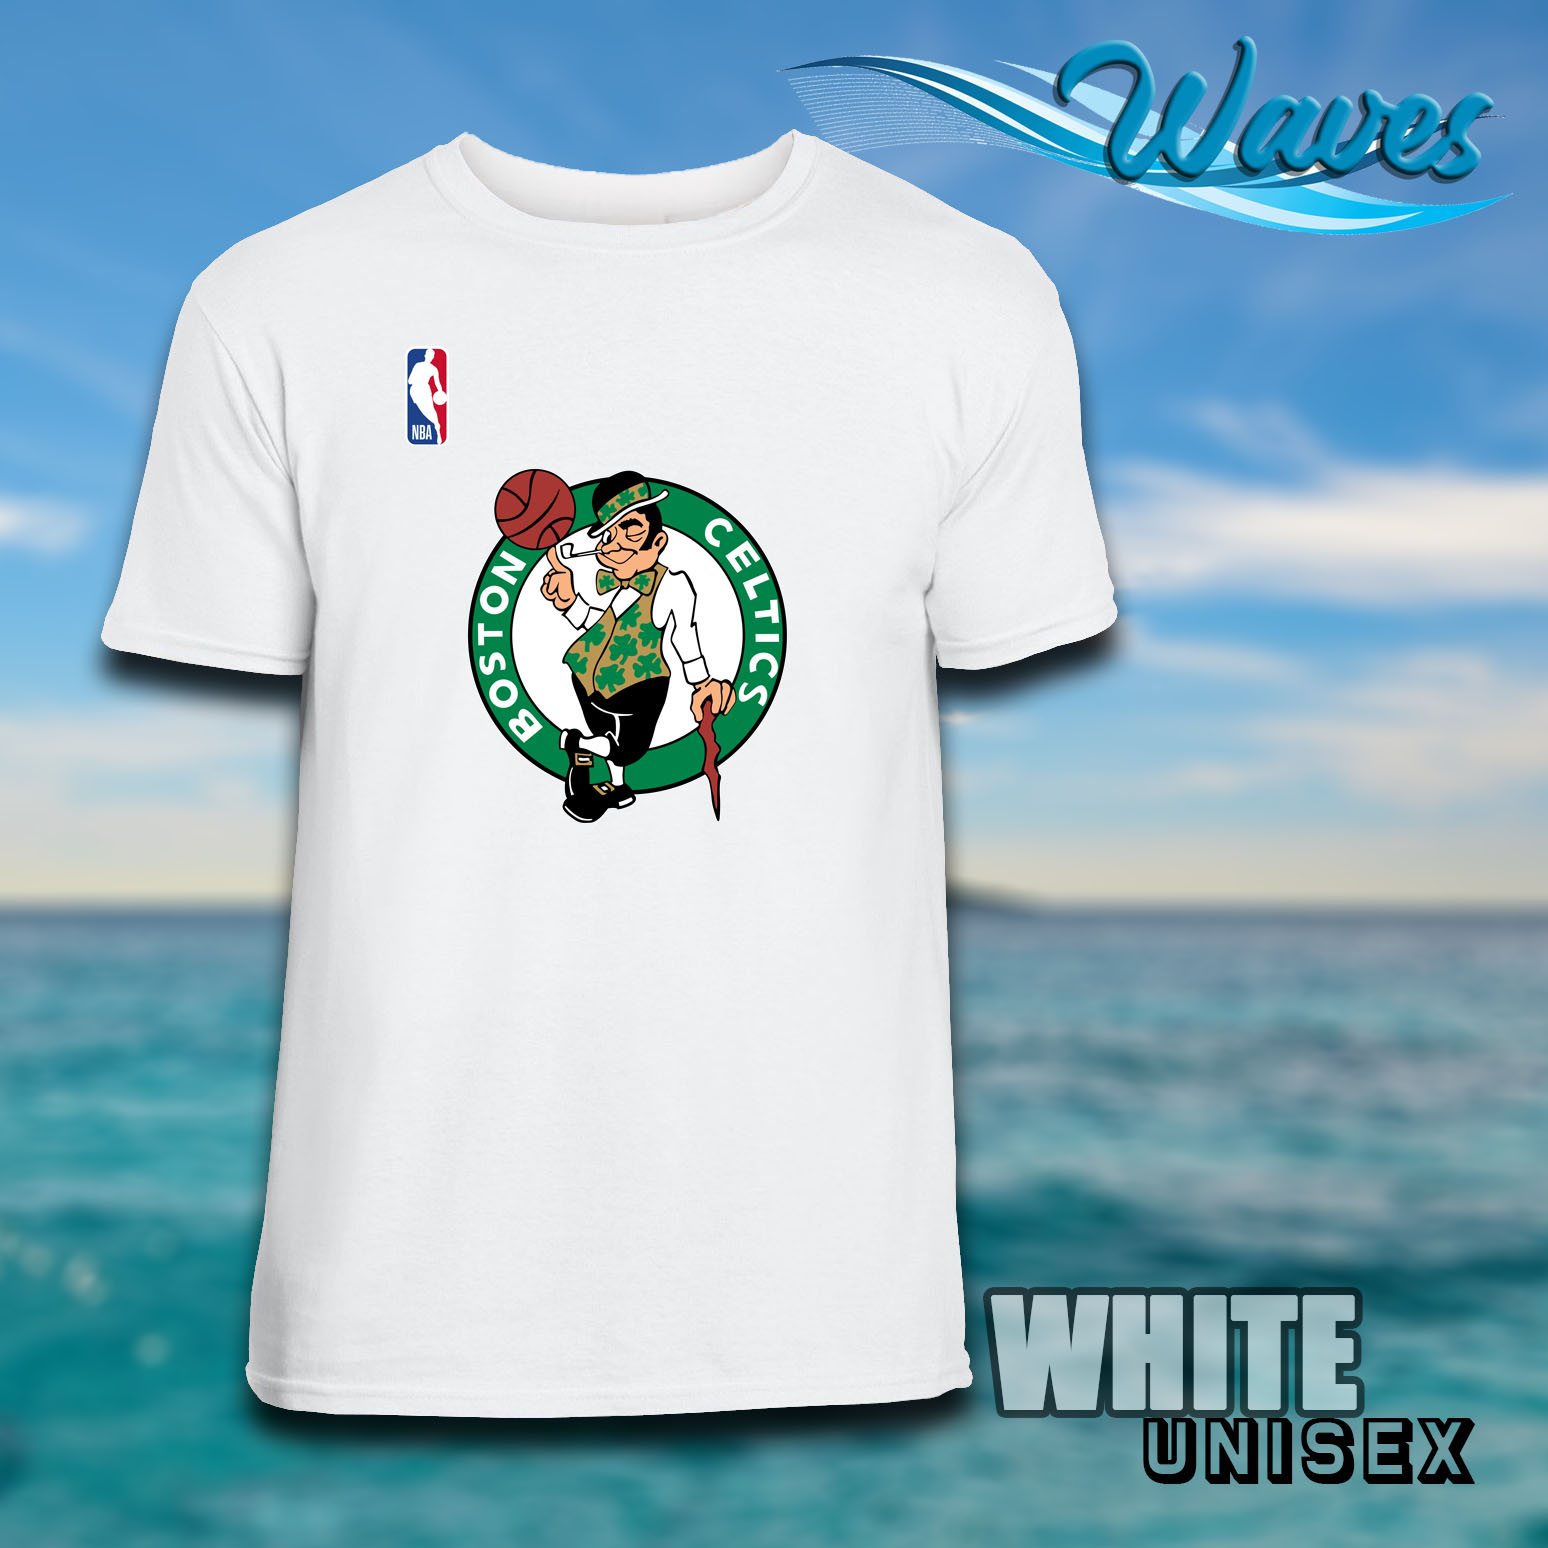 Boston Celtics - Home jersey redesign by Ivan Jovanić on Dribbble